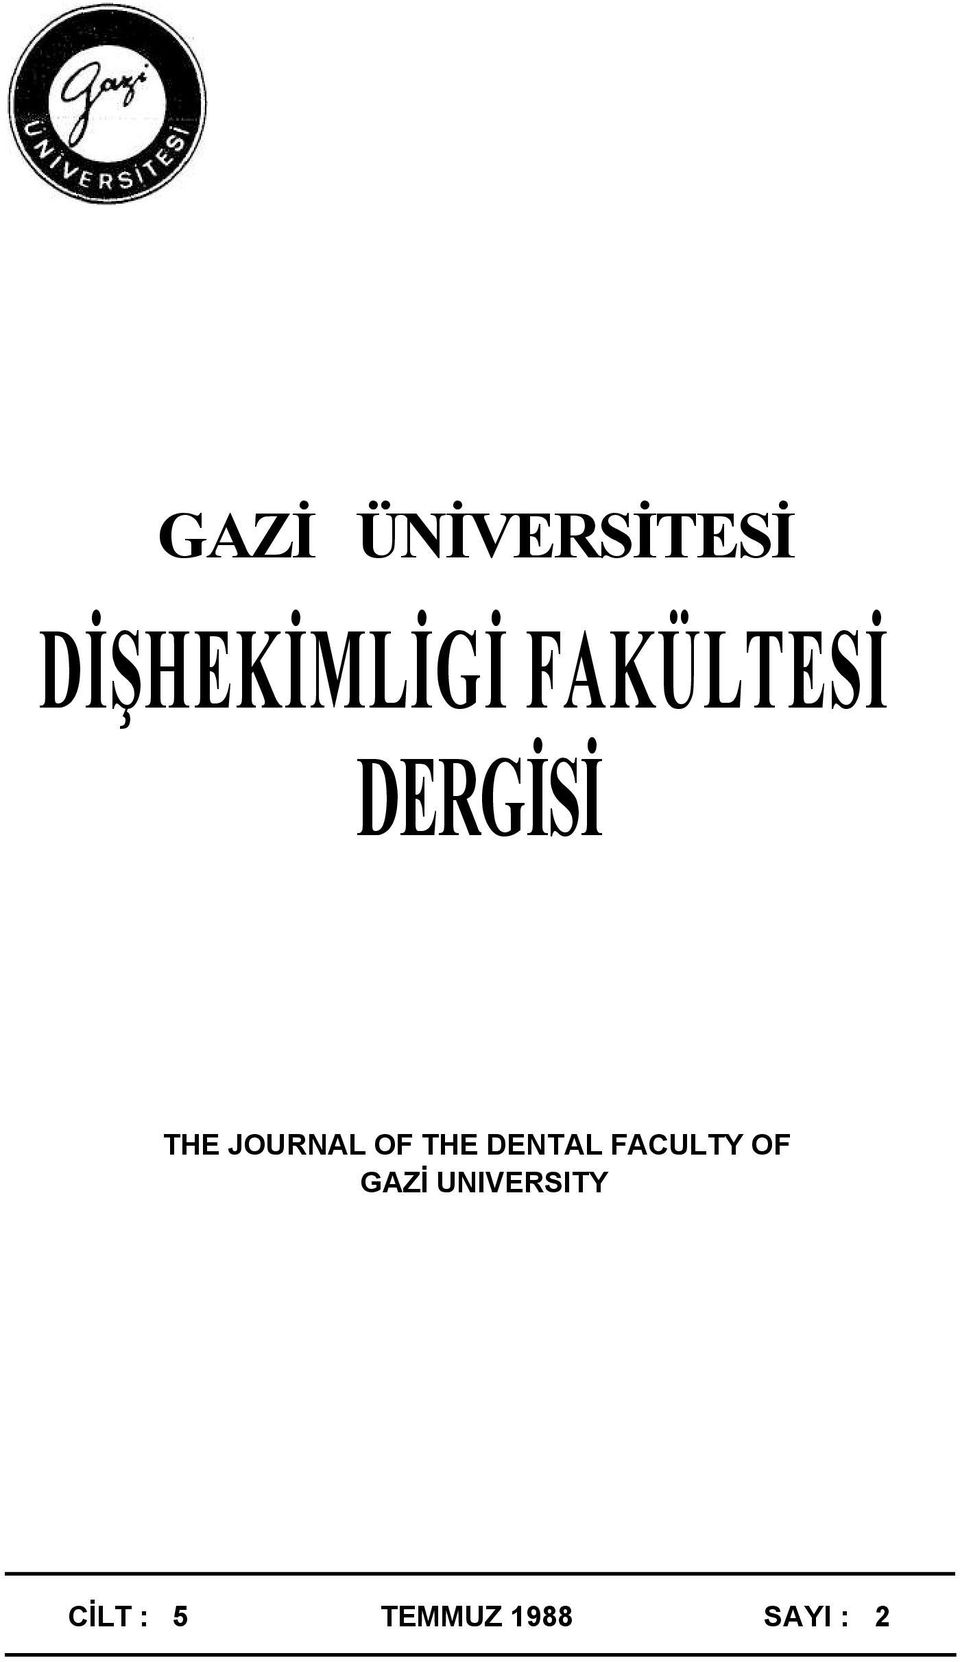 THE DENTAL FACULTY OF GAZİ